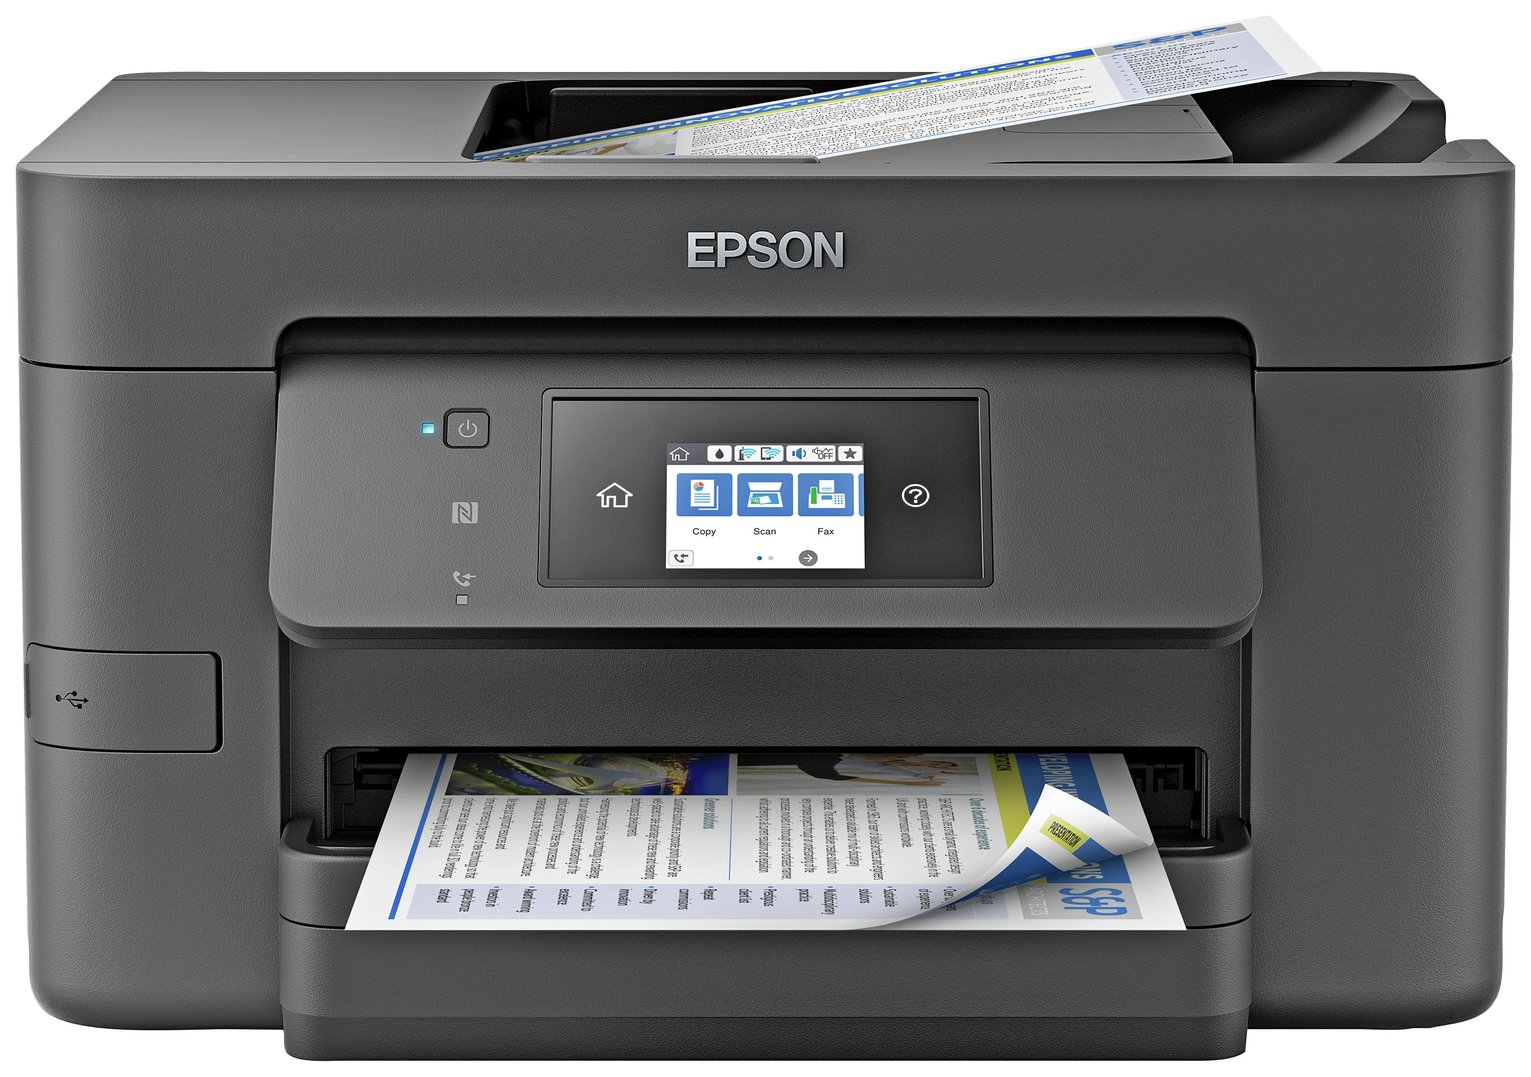 Epson Workforce Pro Wf 3720dwf Inkjet Printer Review 8715